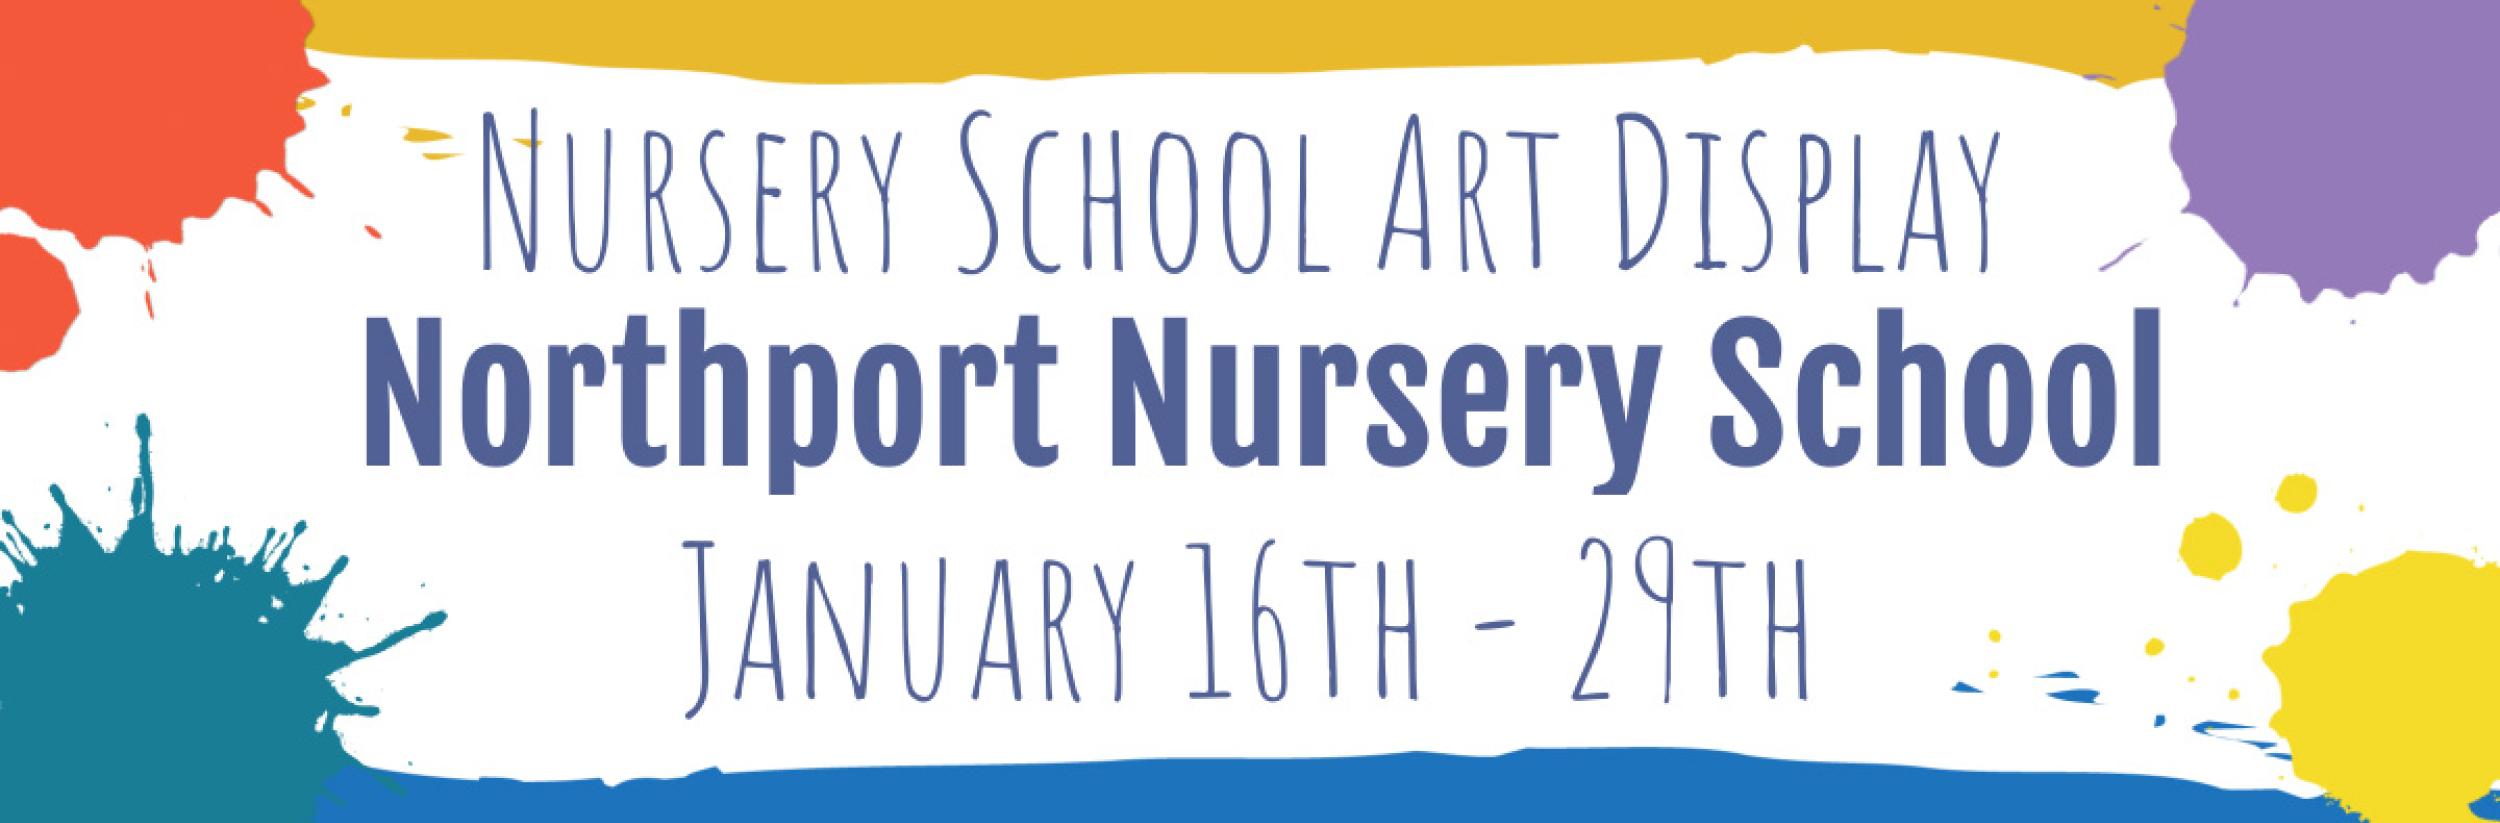 Image for "Nursery School Art: Northport Nursery School"